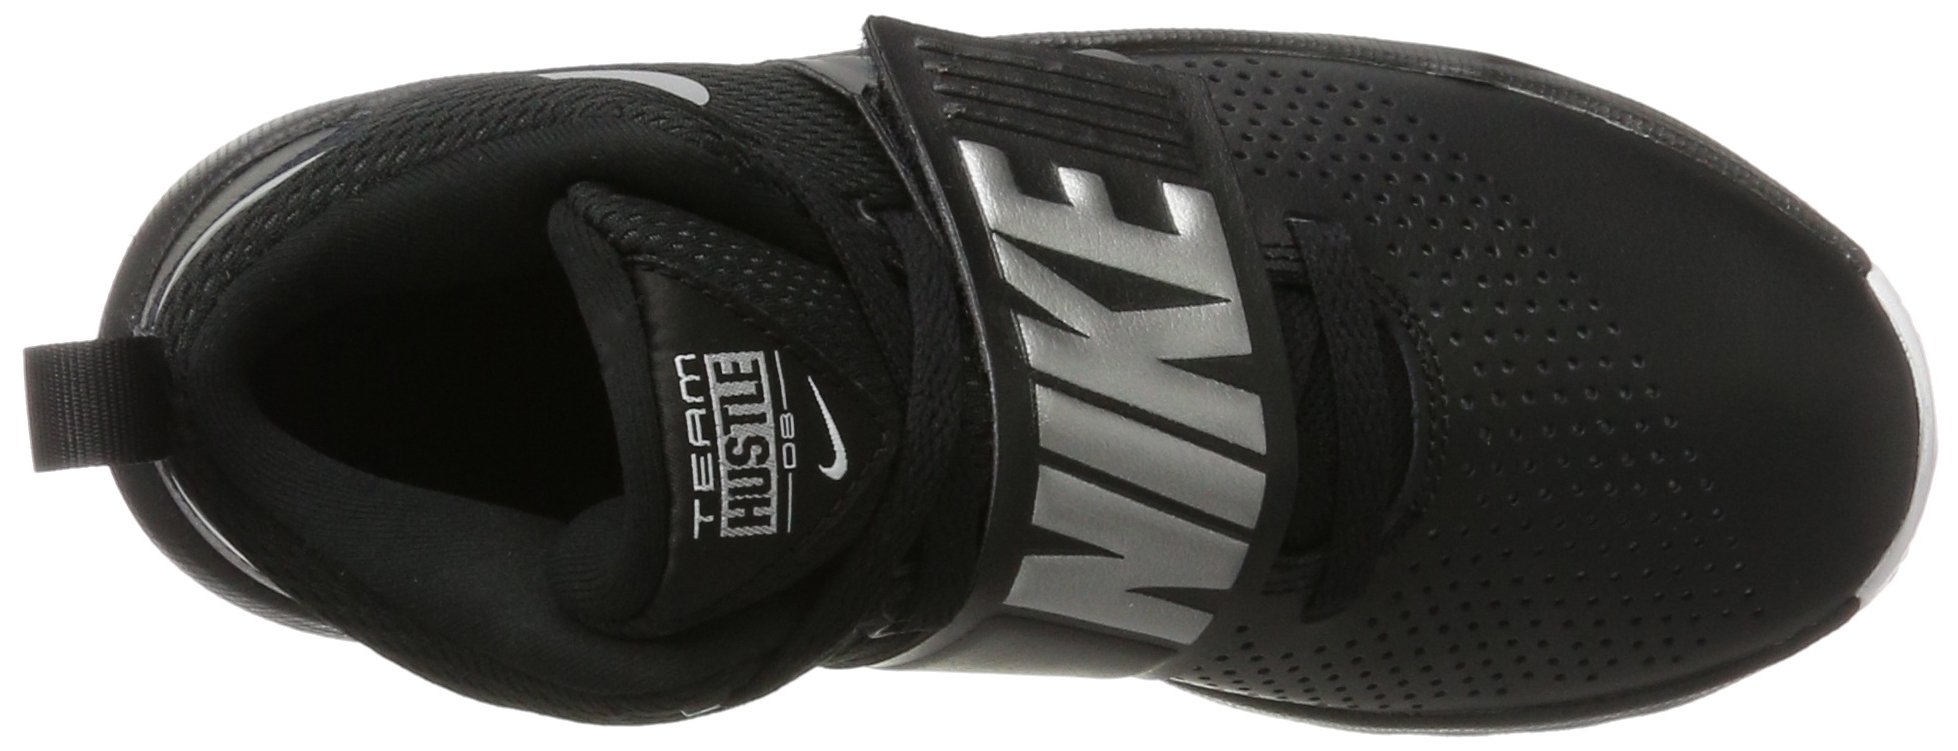 Nike Unisex-Child Team Hustle D 8 (Gs) Basketball Shoe